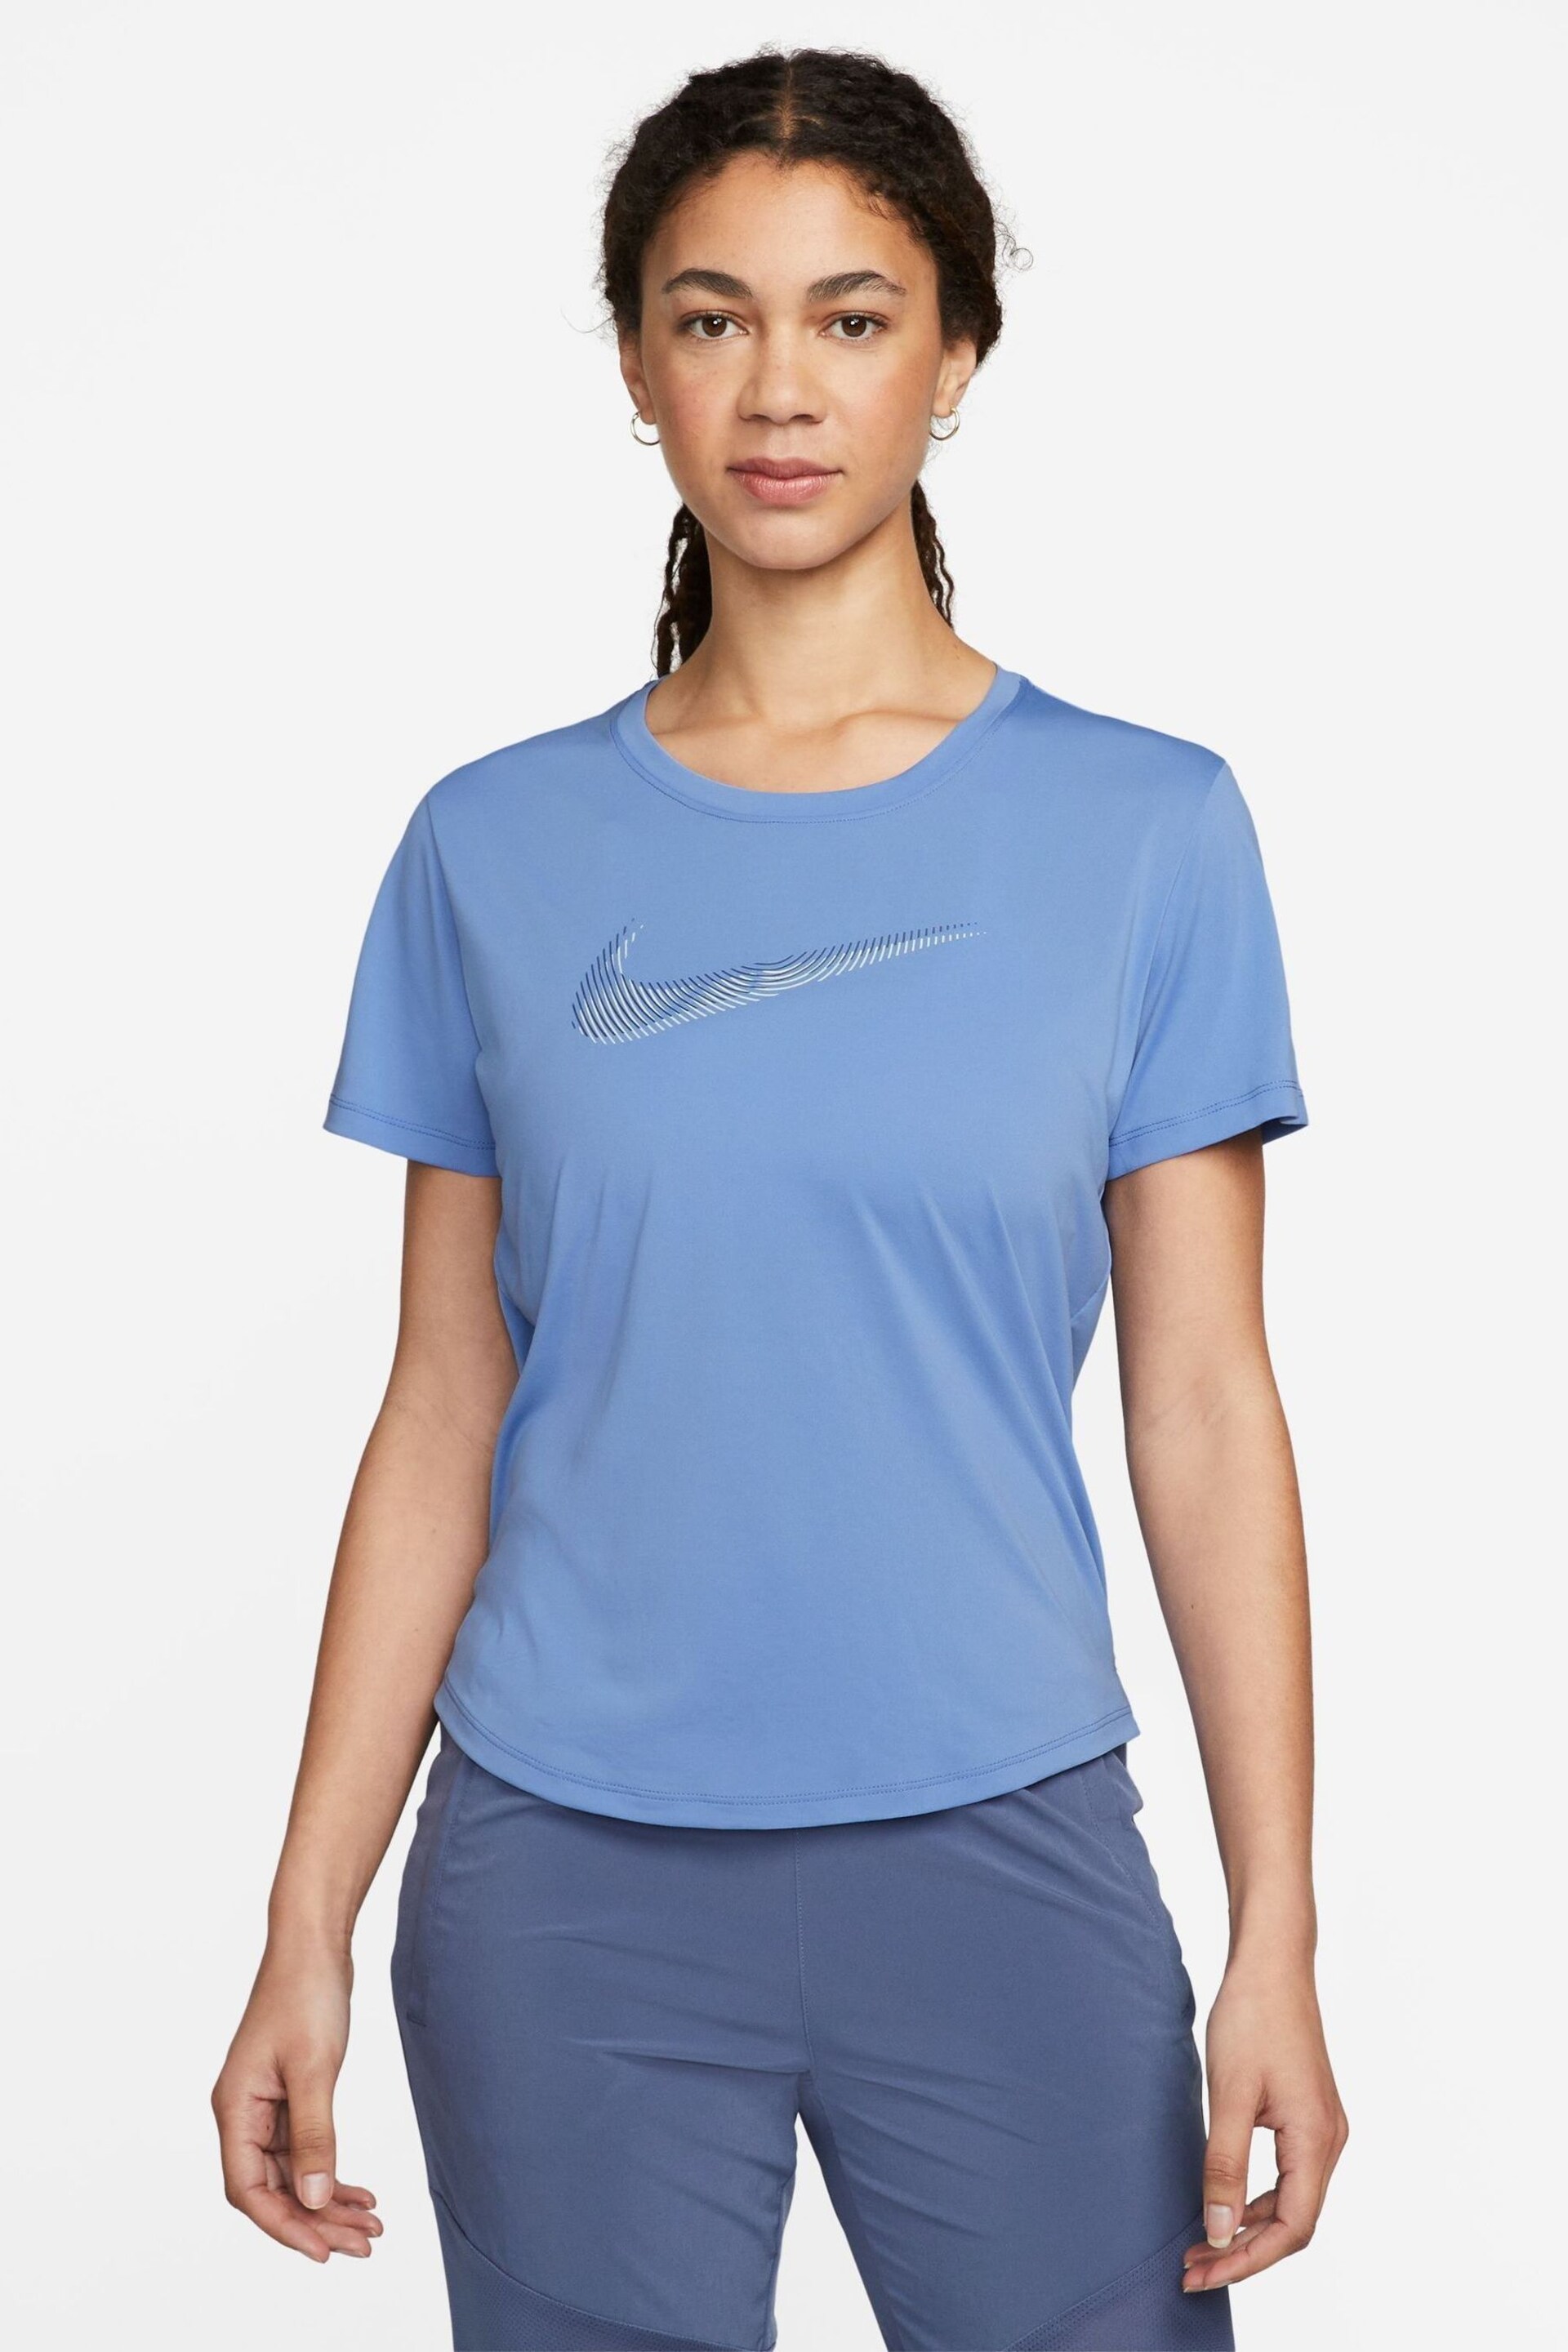 Nike Blue Dri-FIT Swoosh Short-Sleeve Running Top - Image 1 of 3